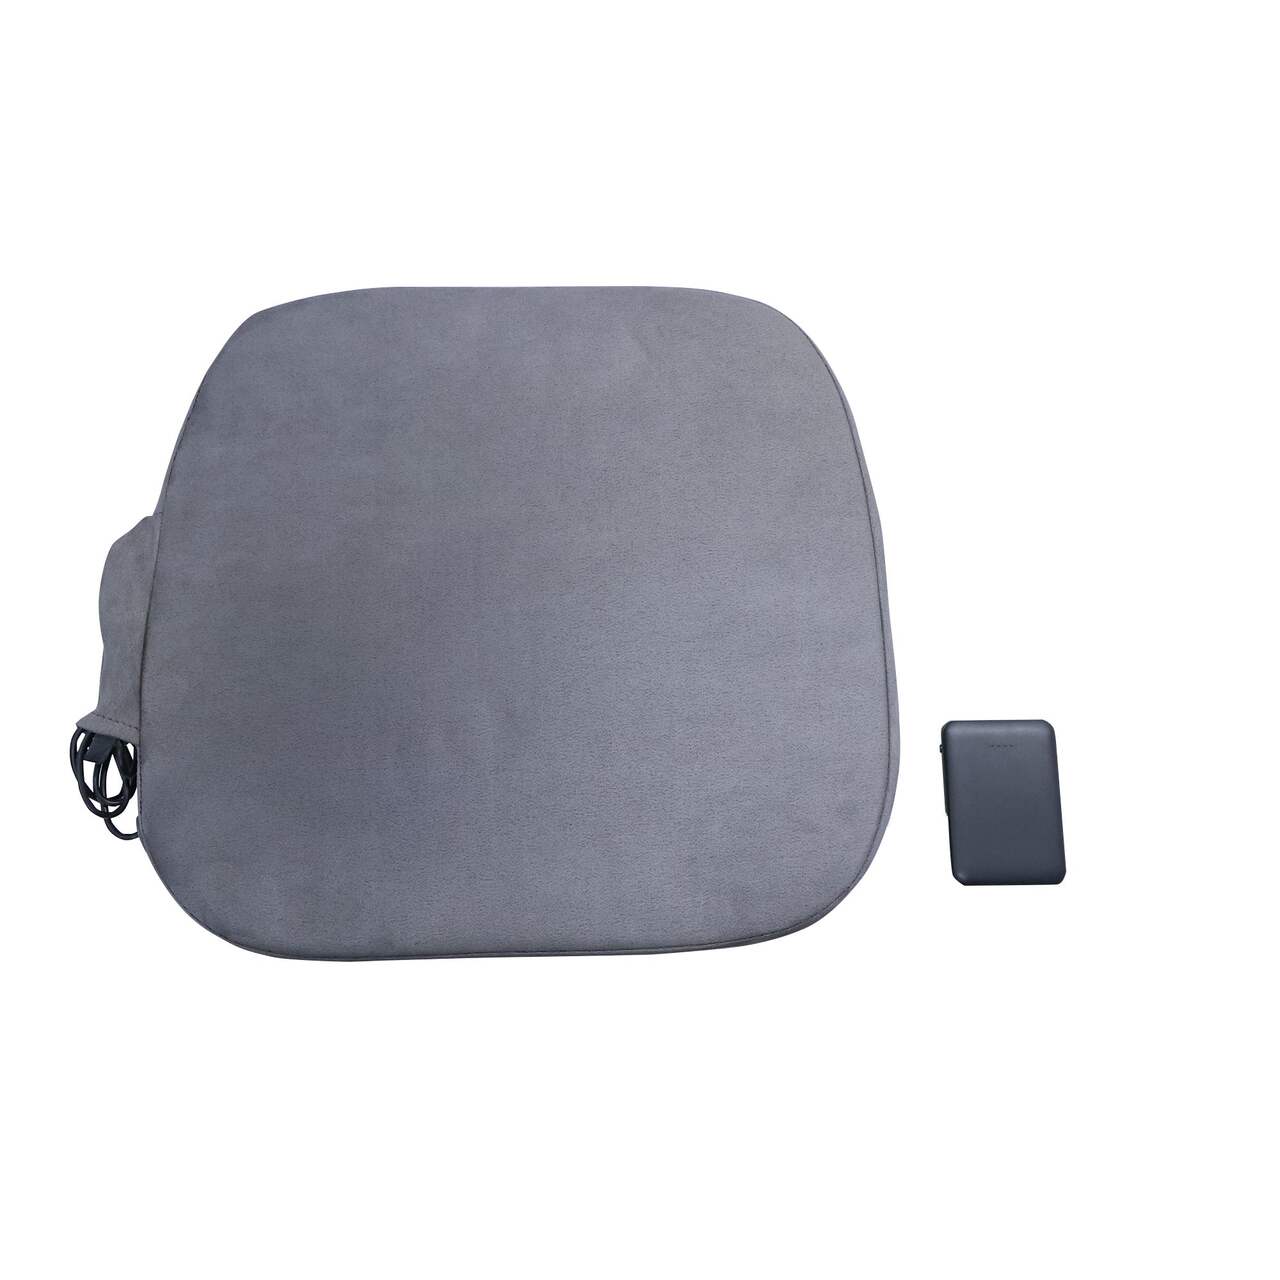 Treksafe Automotive Heated Lumbar Support Cushion